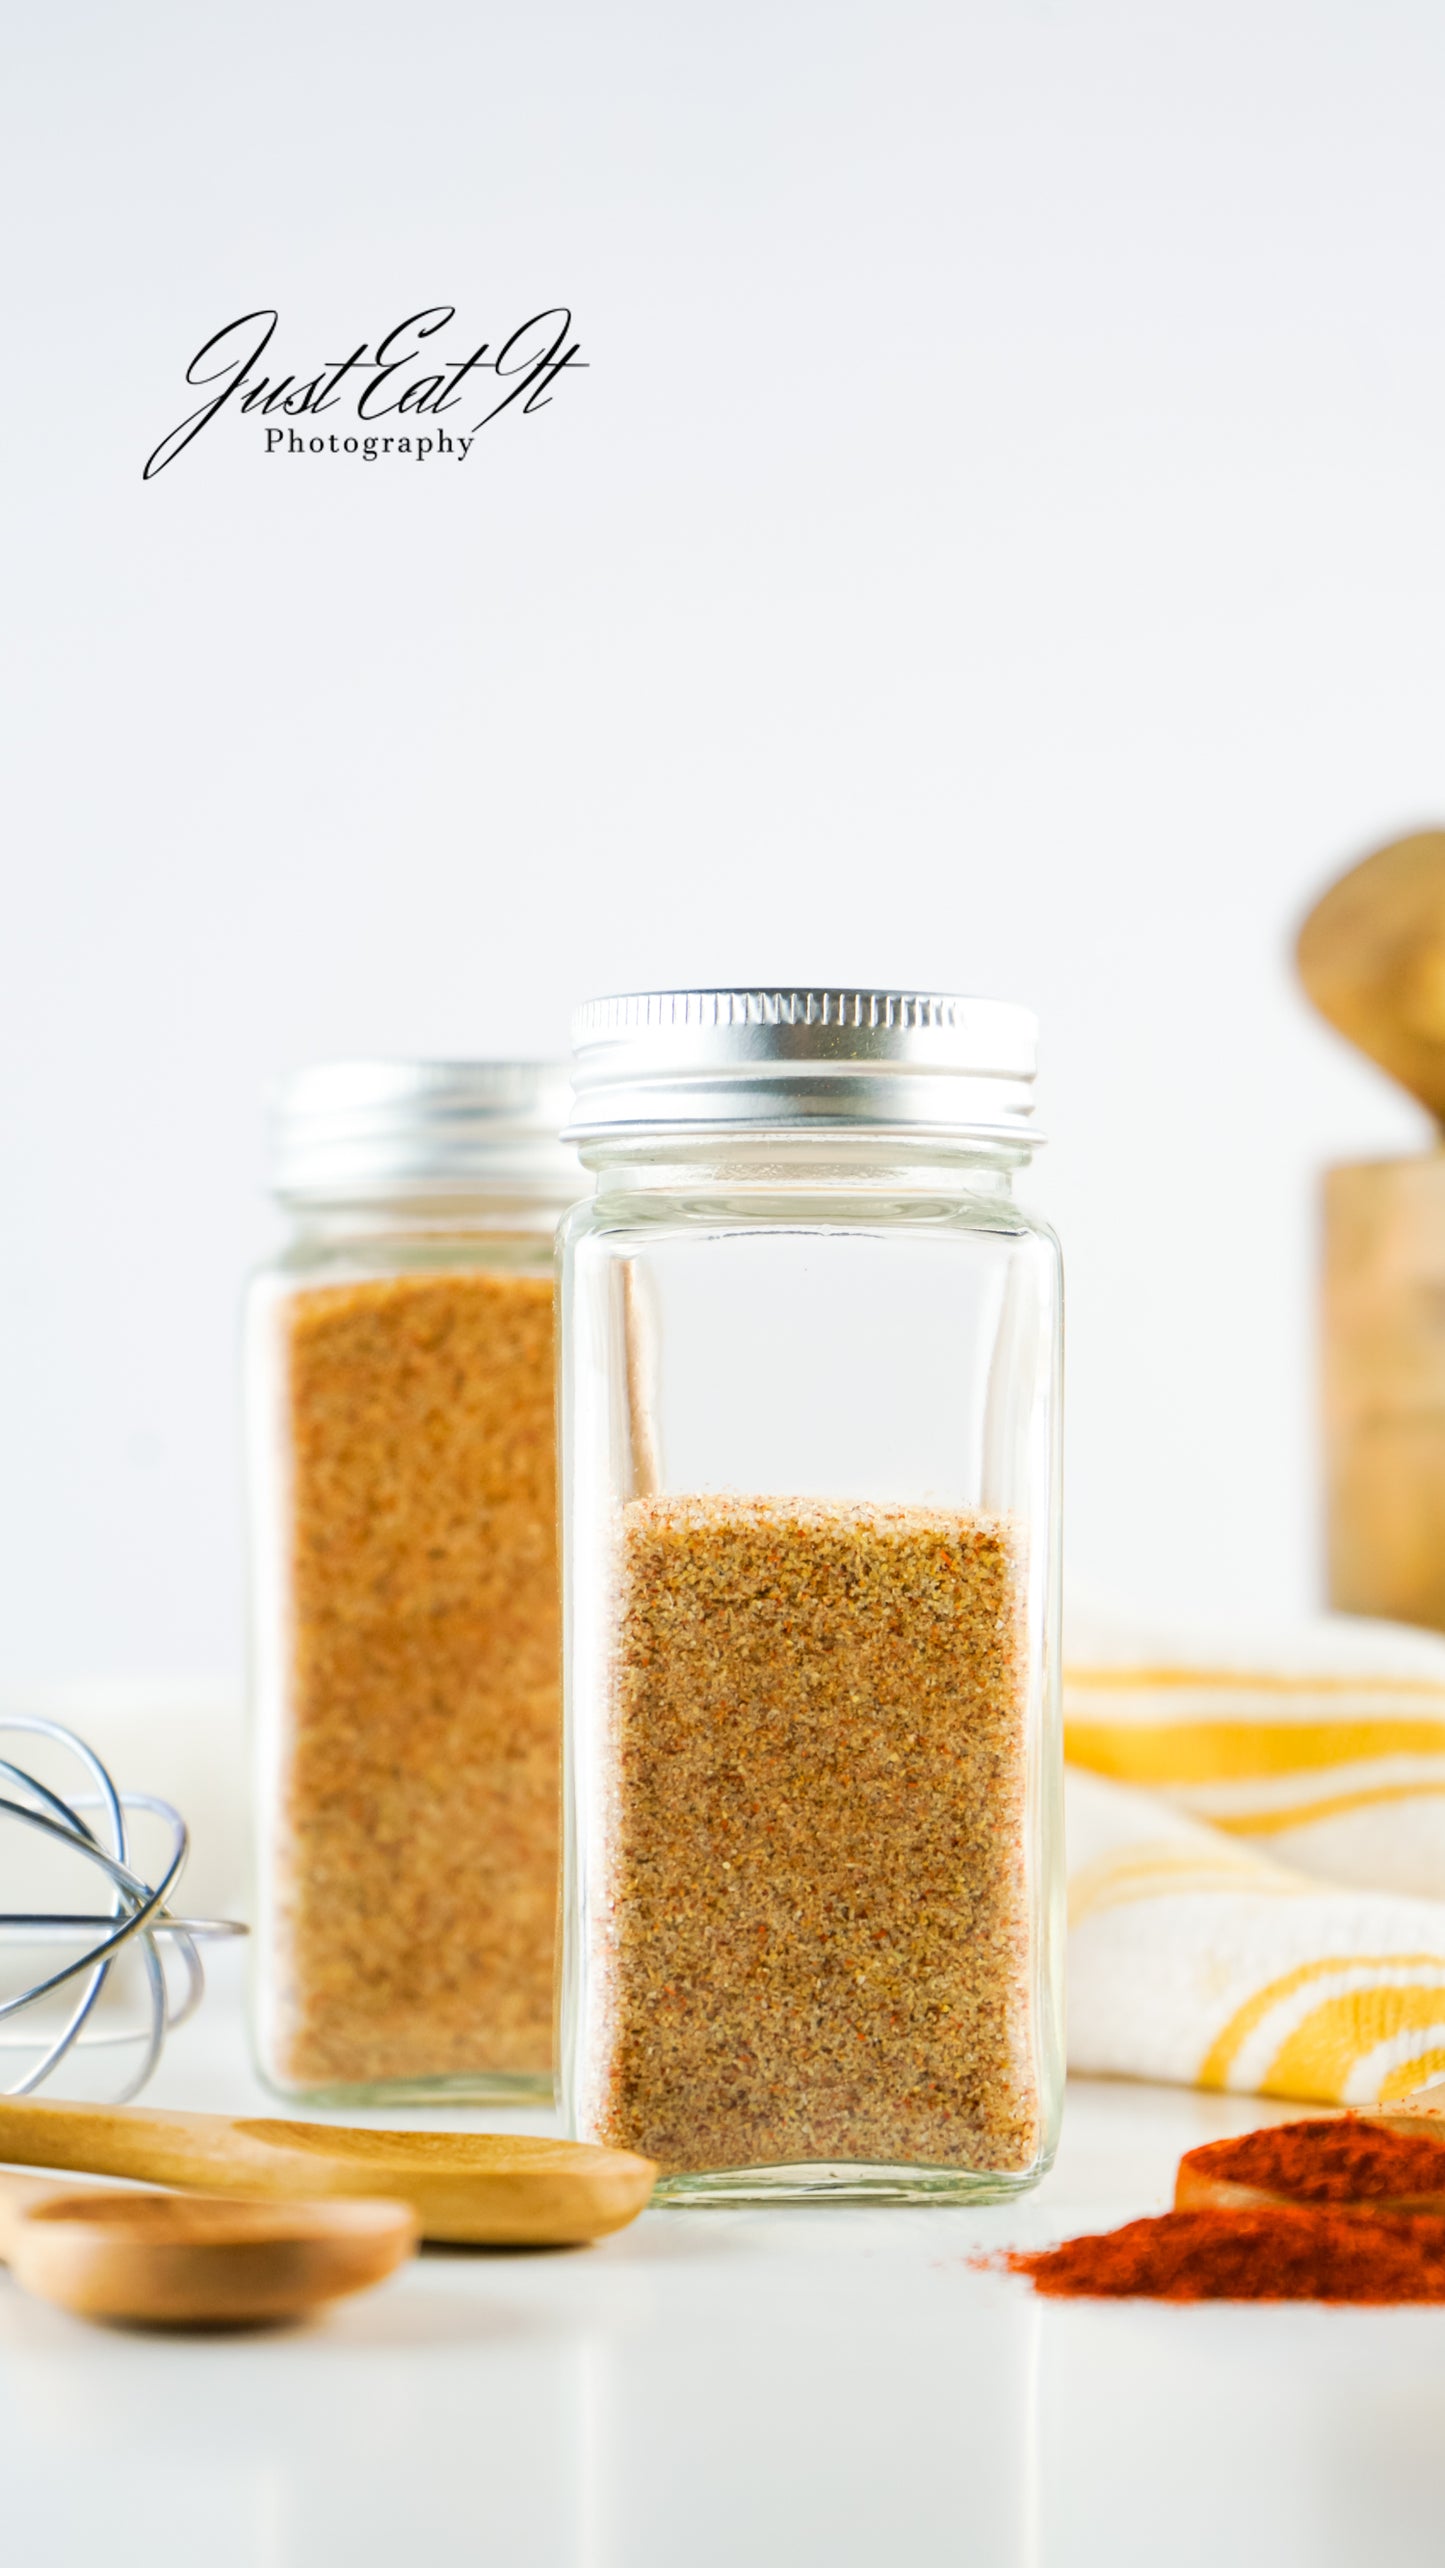 Make Your Own Seasoning Salt - Lawry's Copycat Recipe - Thrifty Jinxy